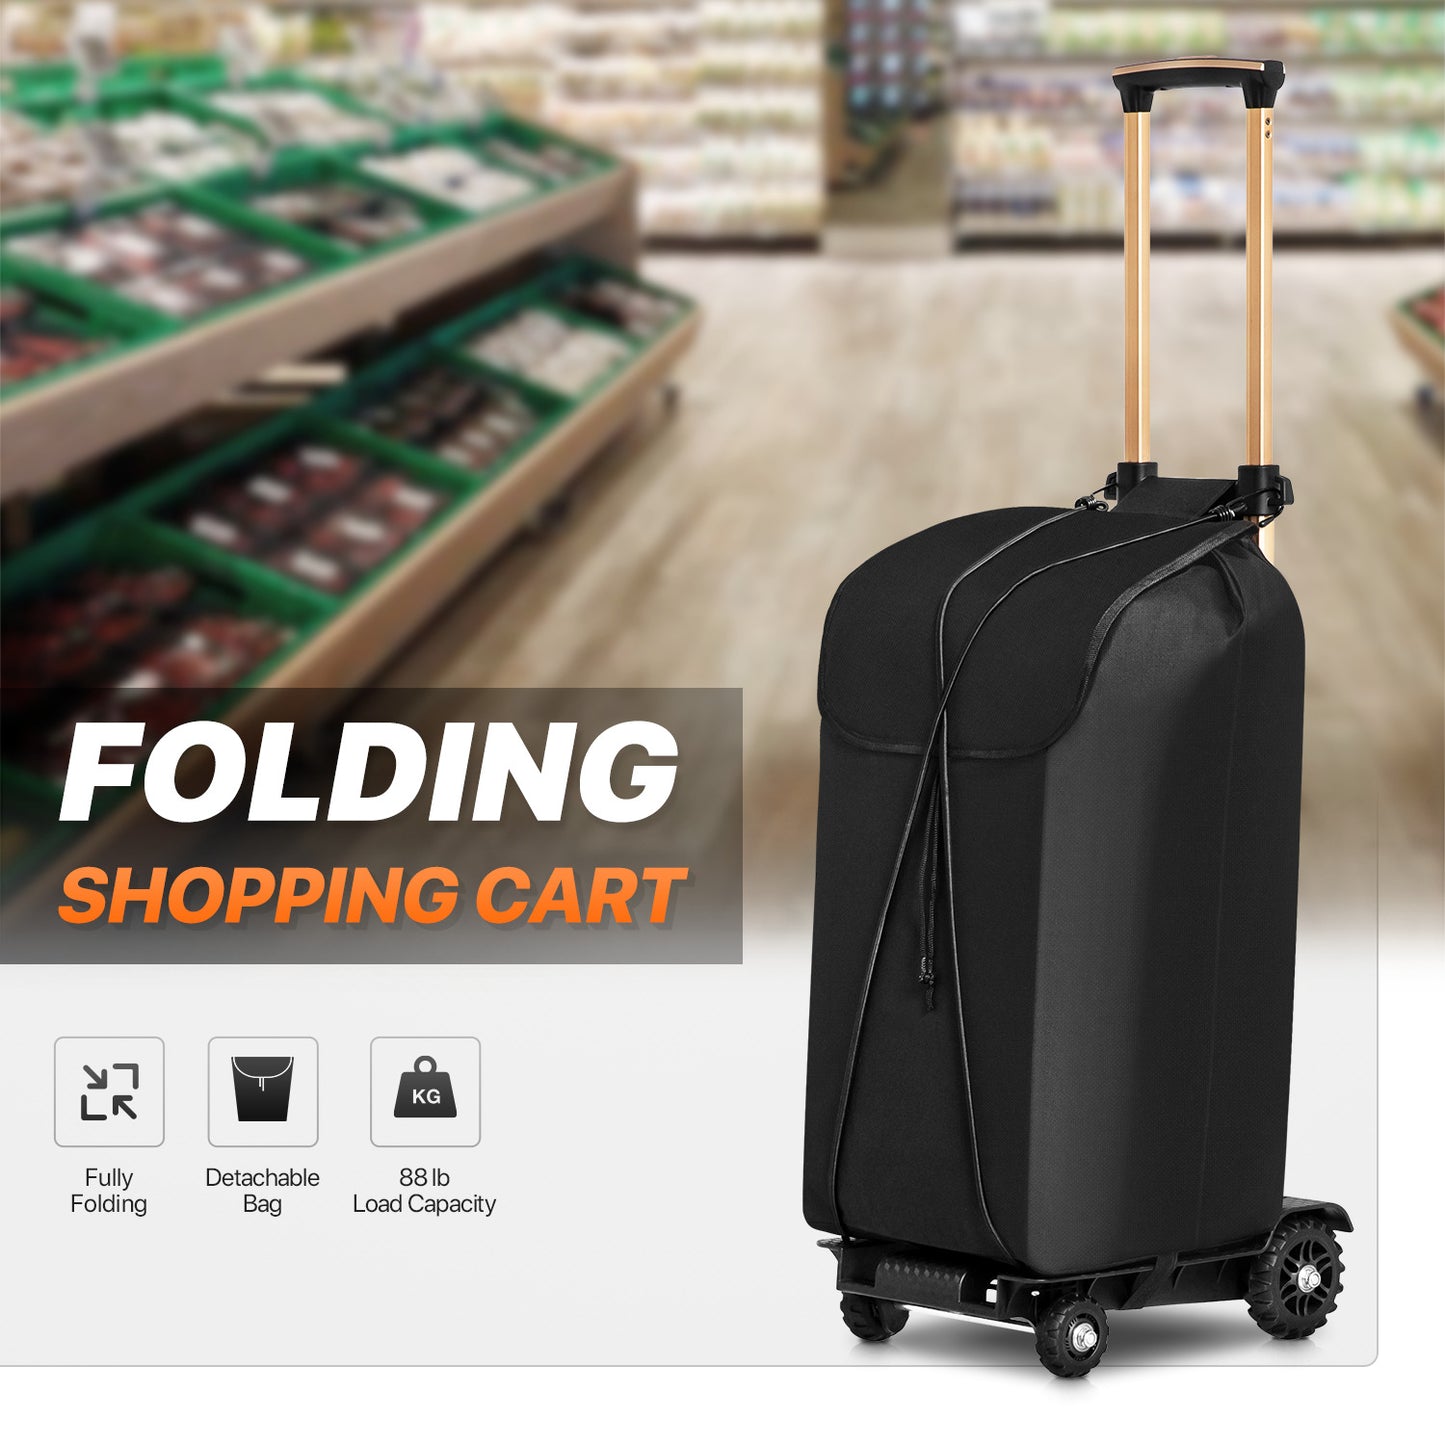 Folding Trolley w/Detachable Bag & Belt - Rigid Front Wheel